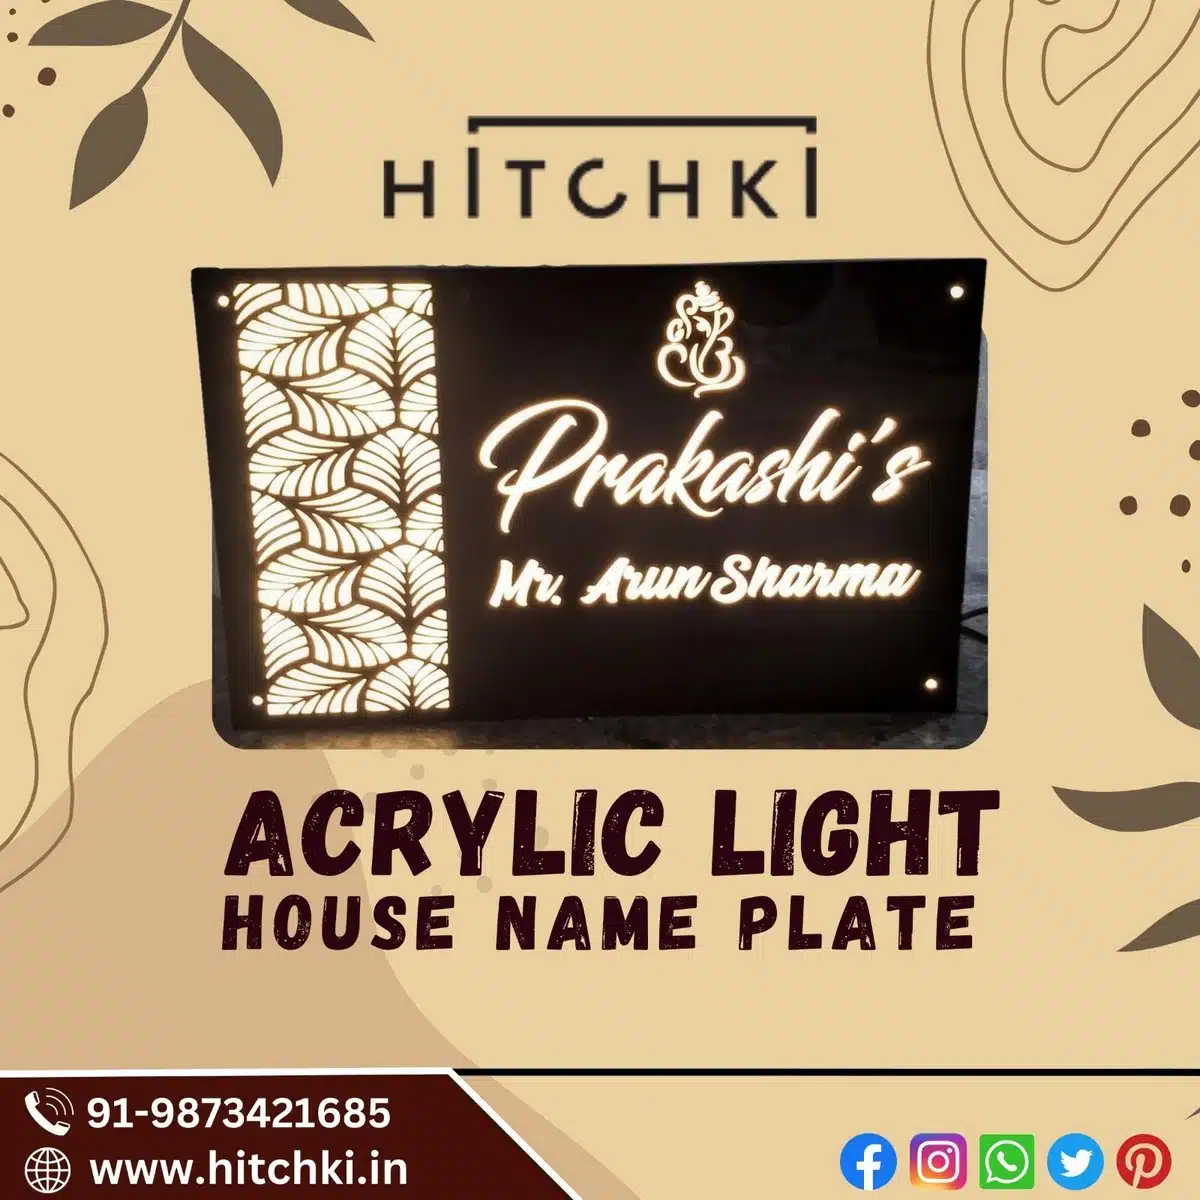 Hitchkis Acrylic Light Nameplate A Perfect Home Decor